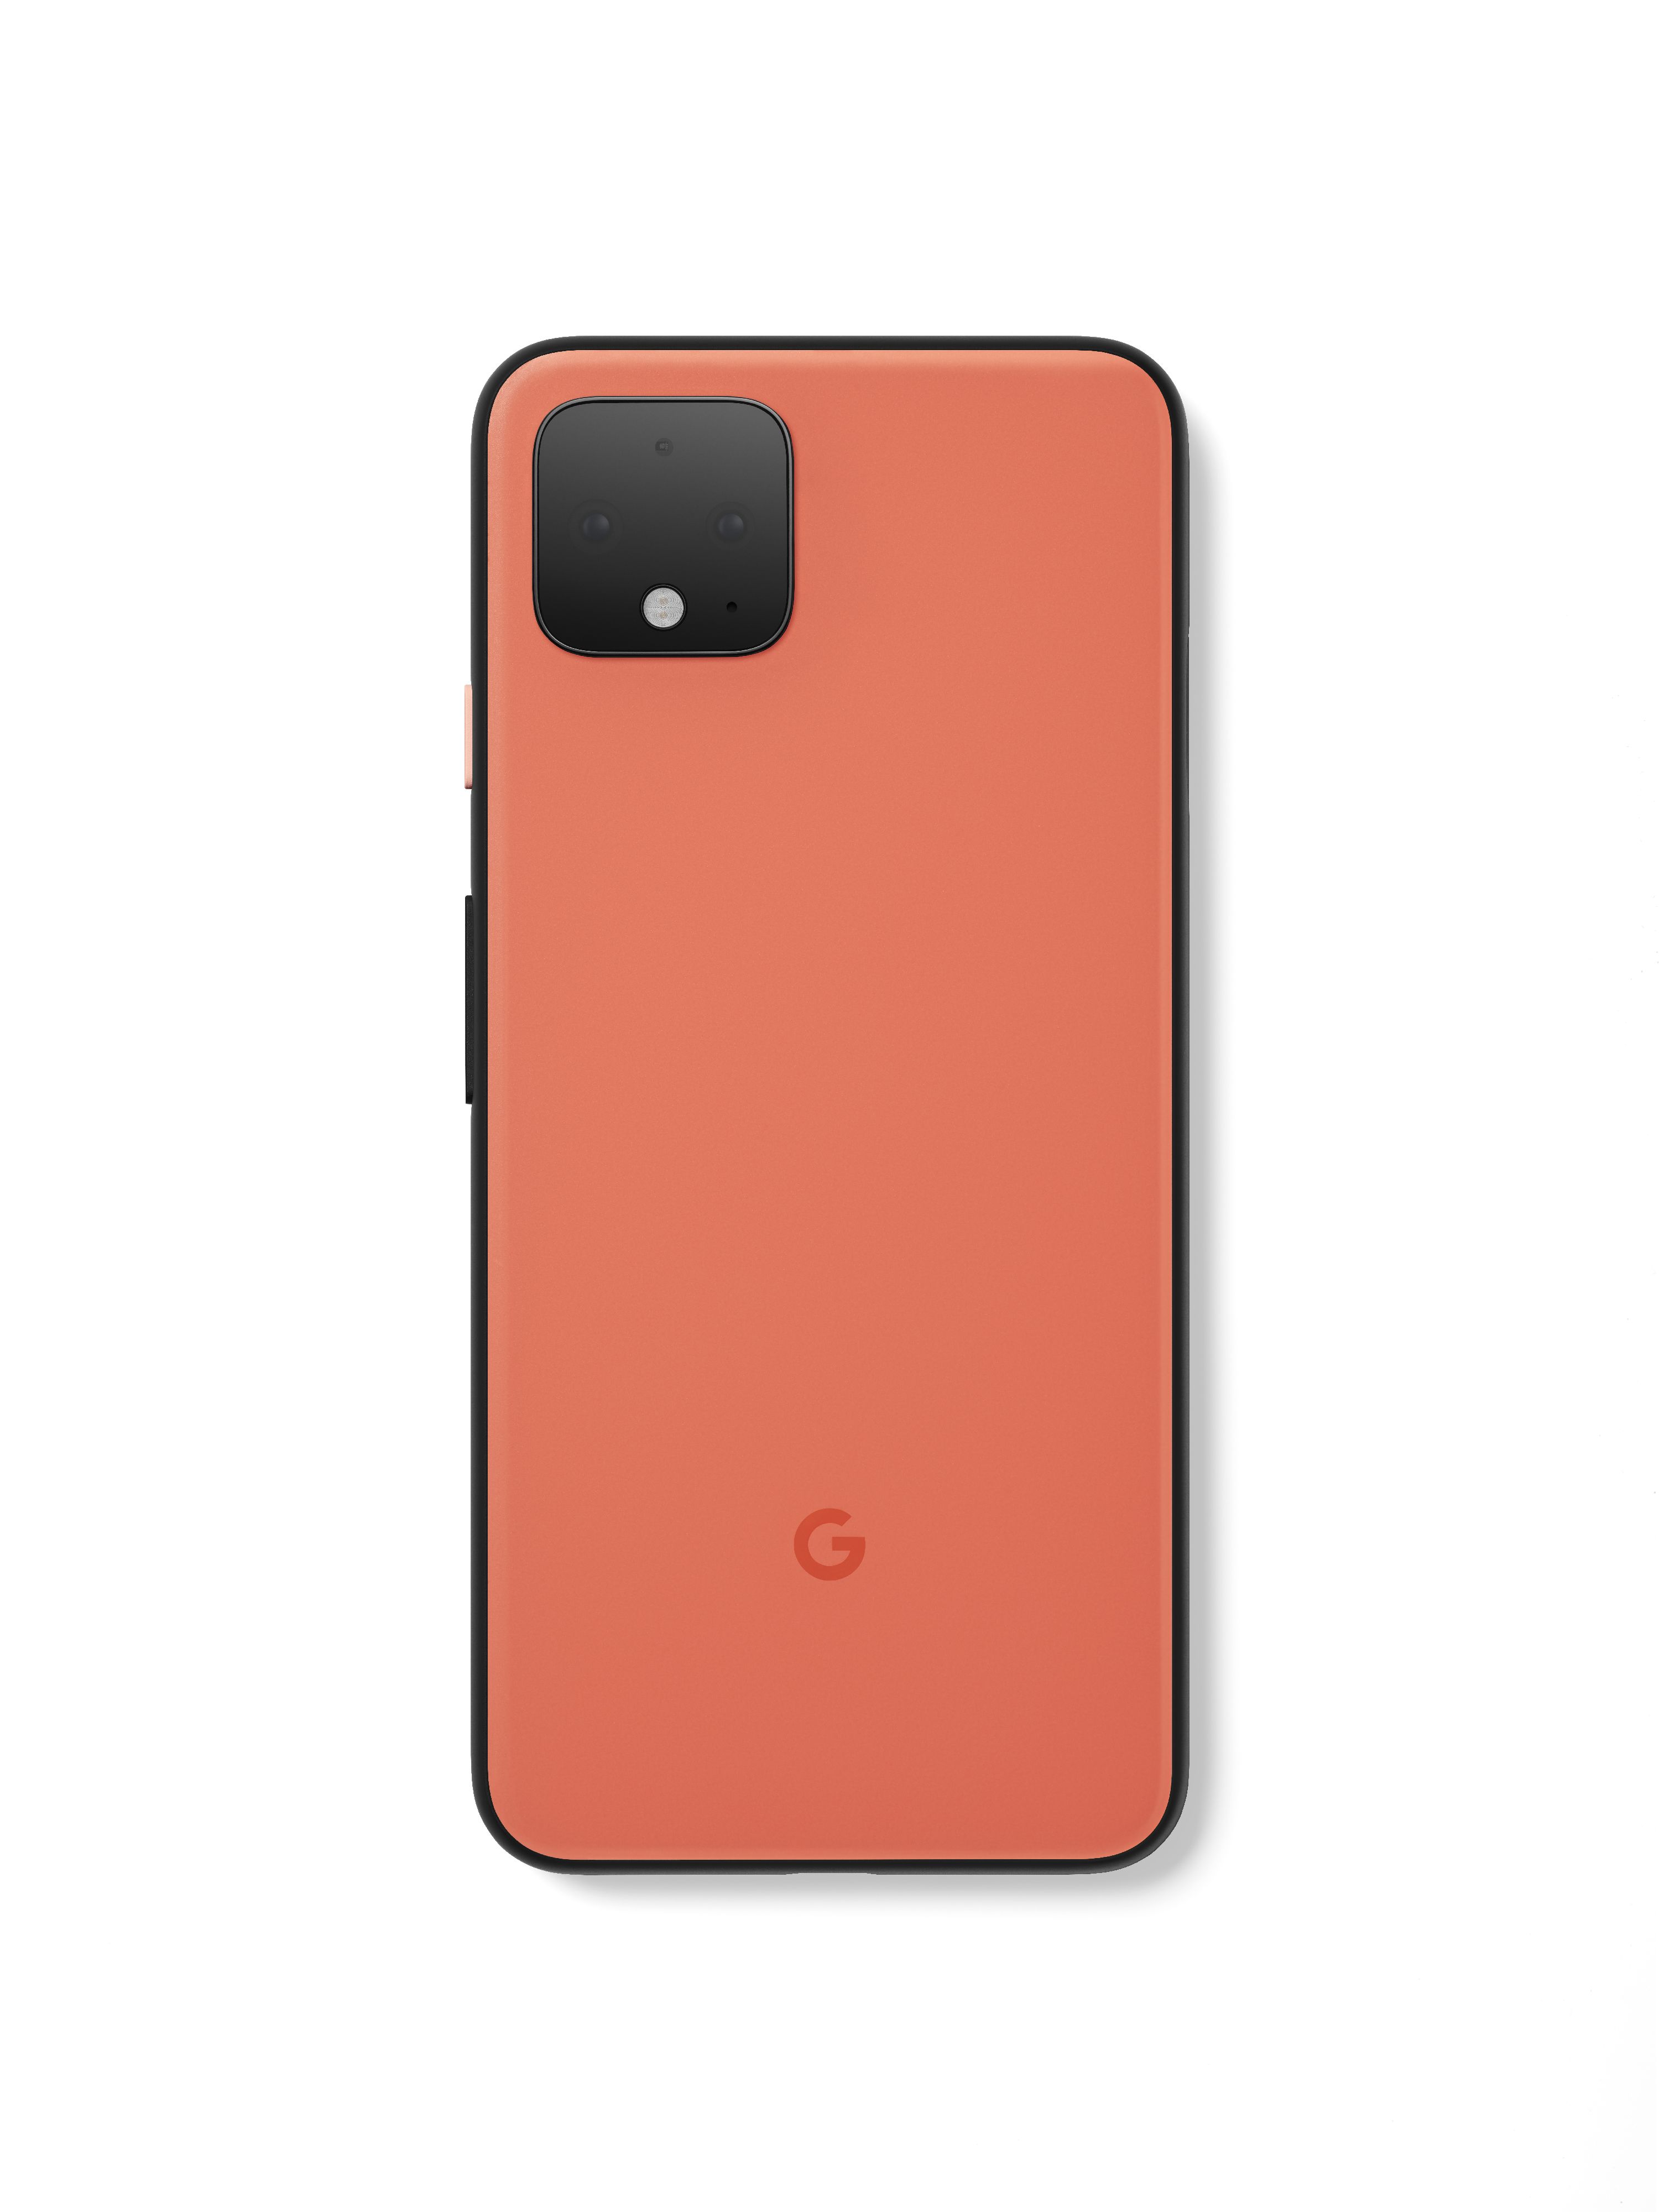 Google Pixel 4 Orange 64 GB, Unlocked - image 2 of 2